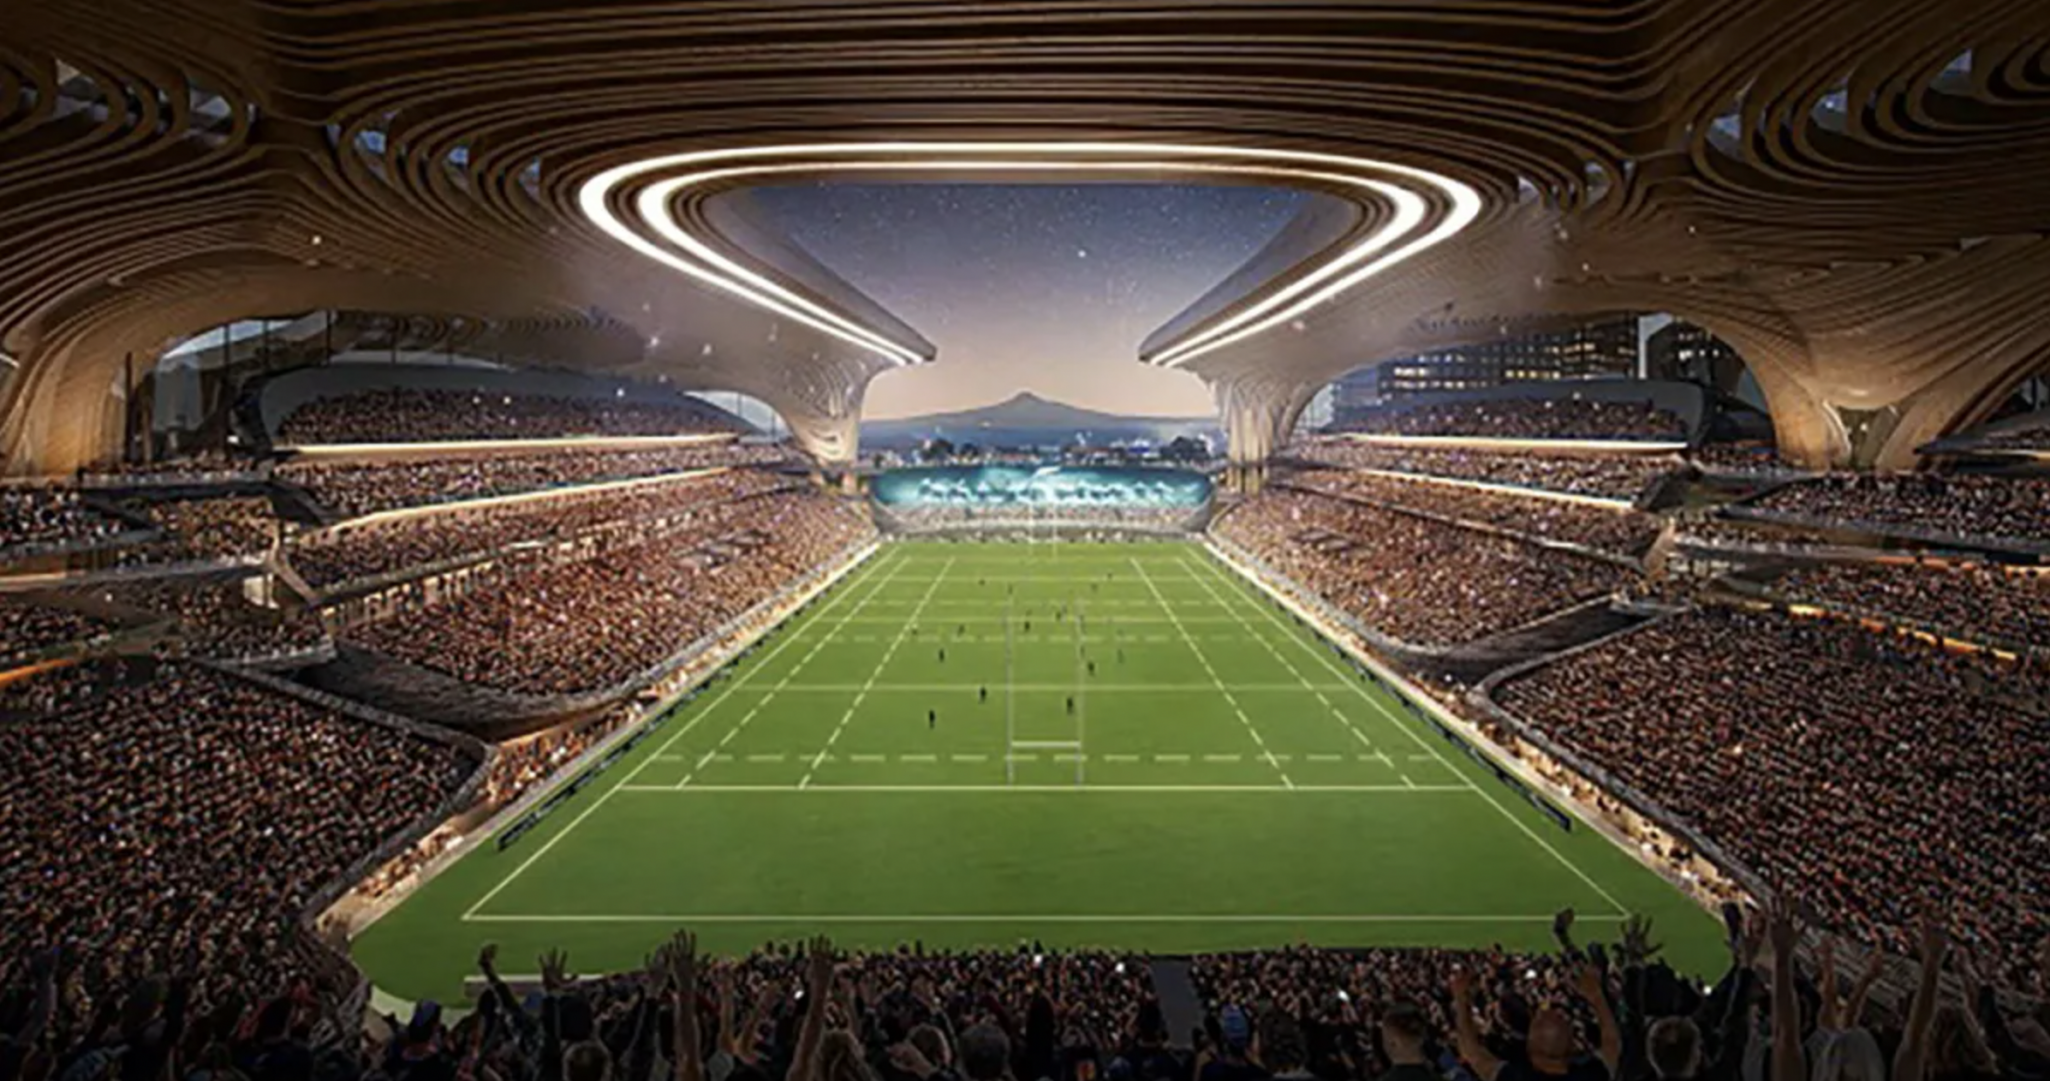 new all blacks stadium concept in auckland nz